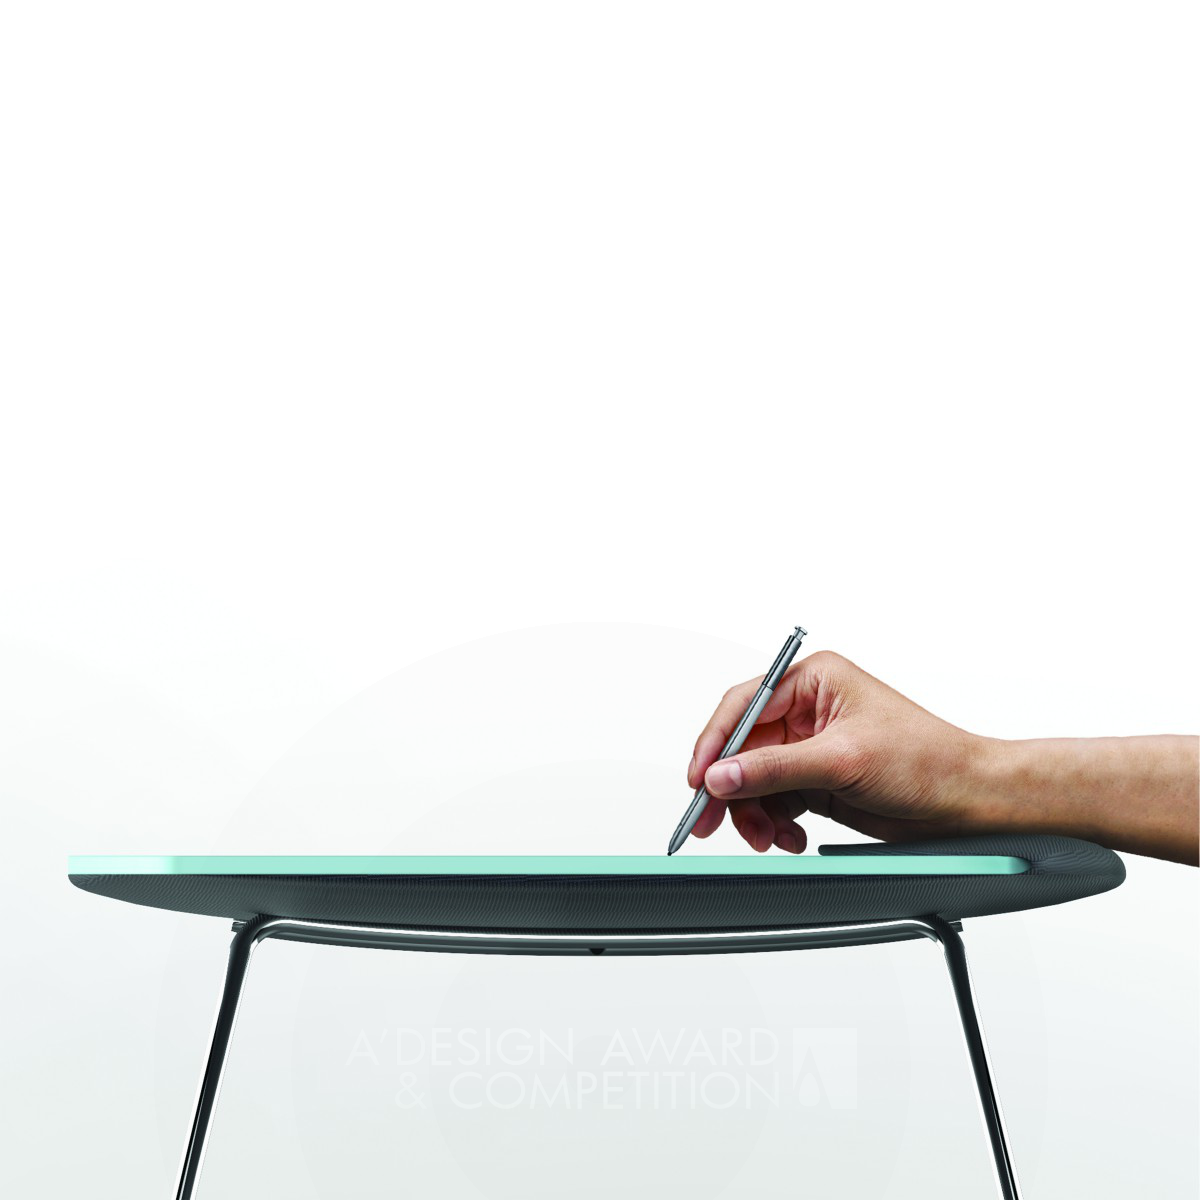 Cushion table <b>Cushion table can reduce the wrist pain.